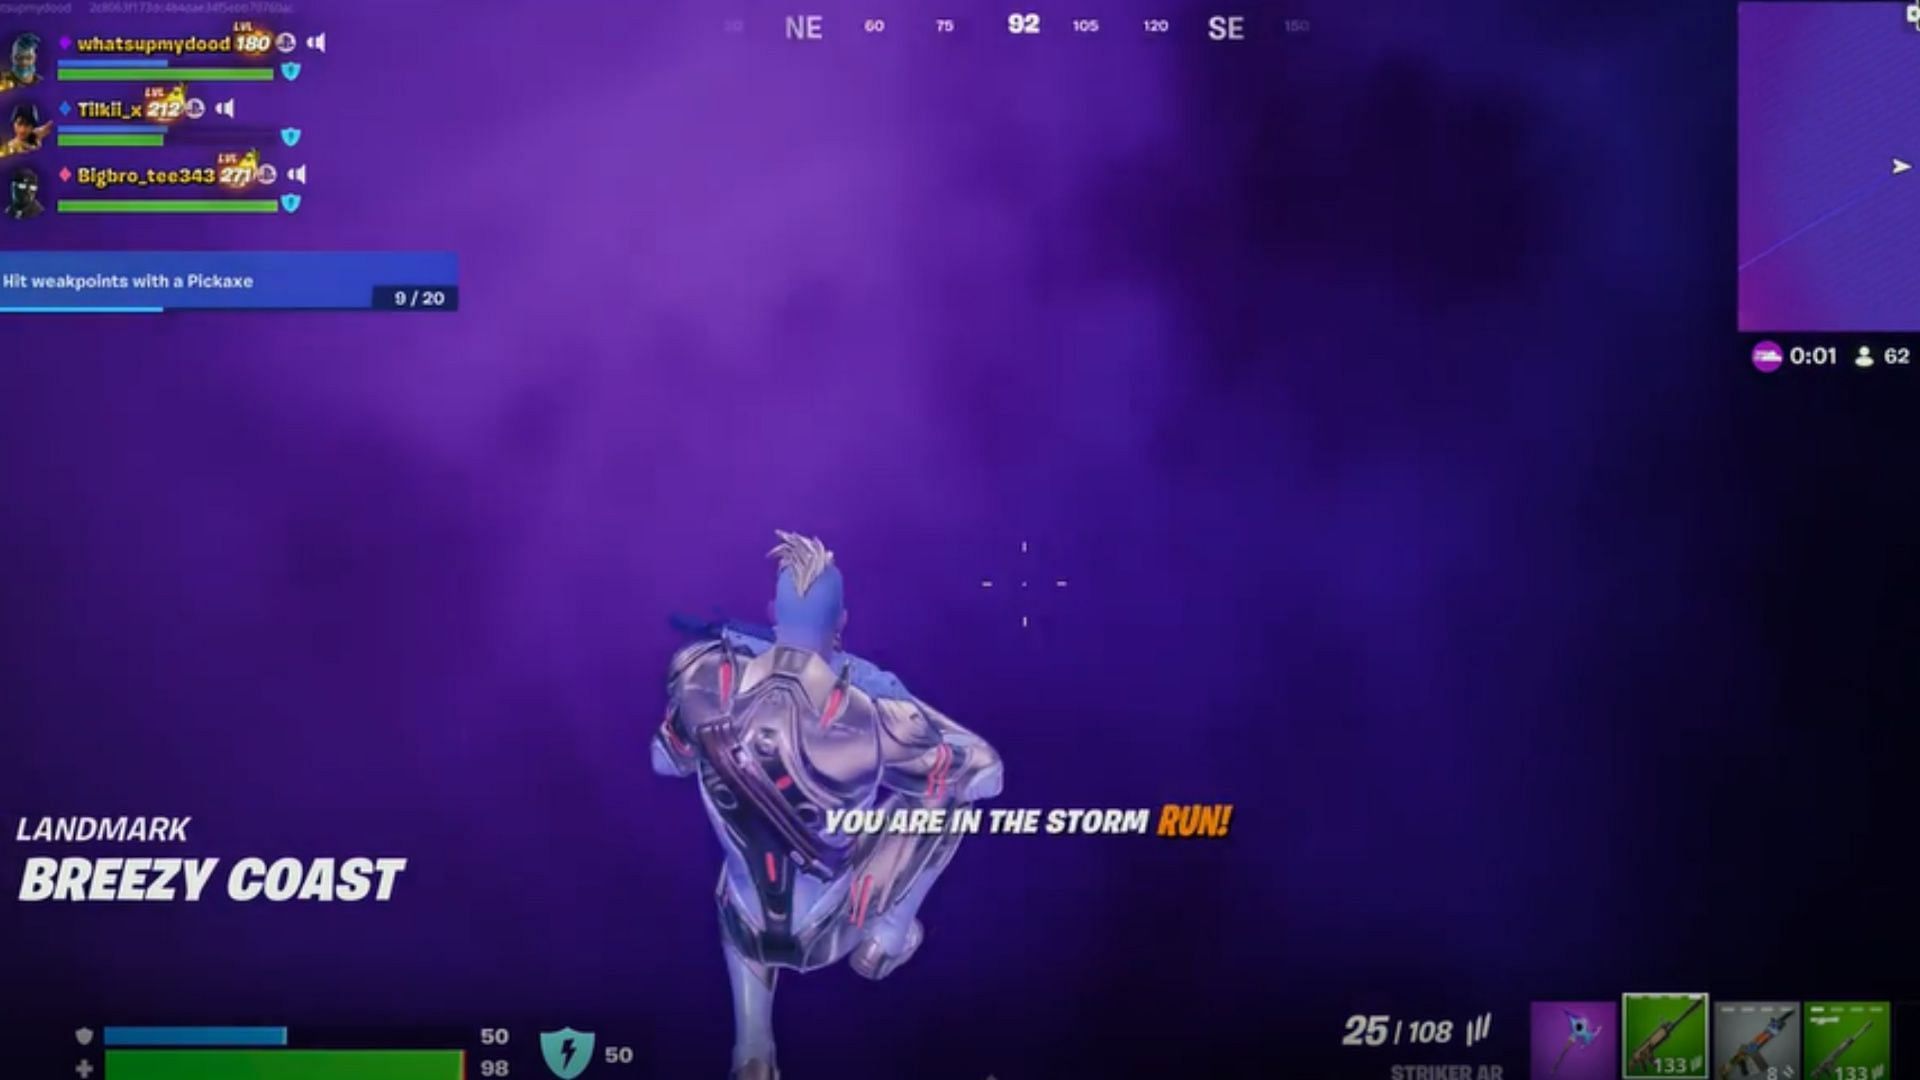 Strange Fortnite glitch sends player flying around the map